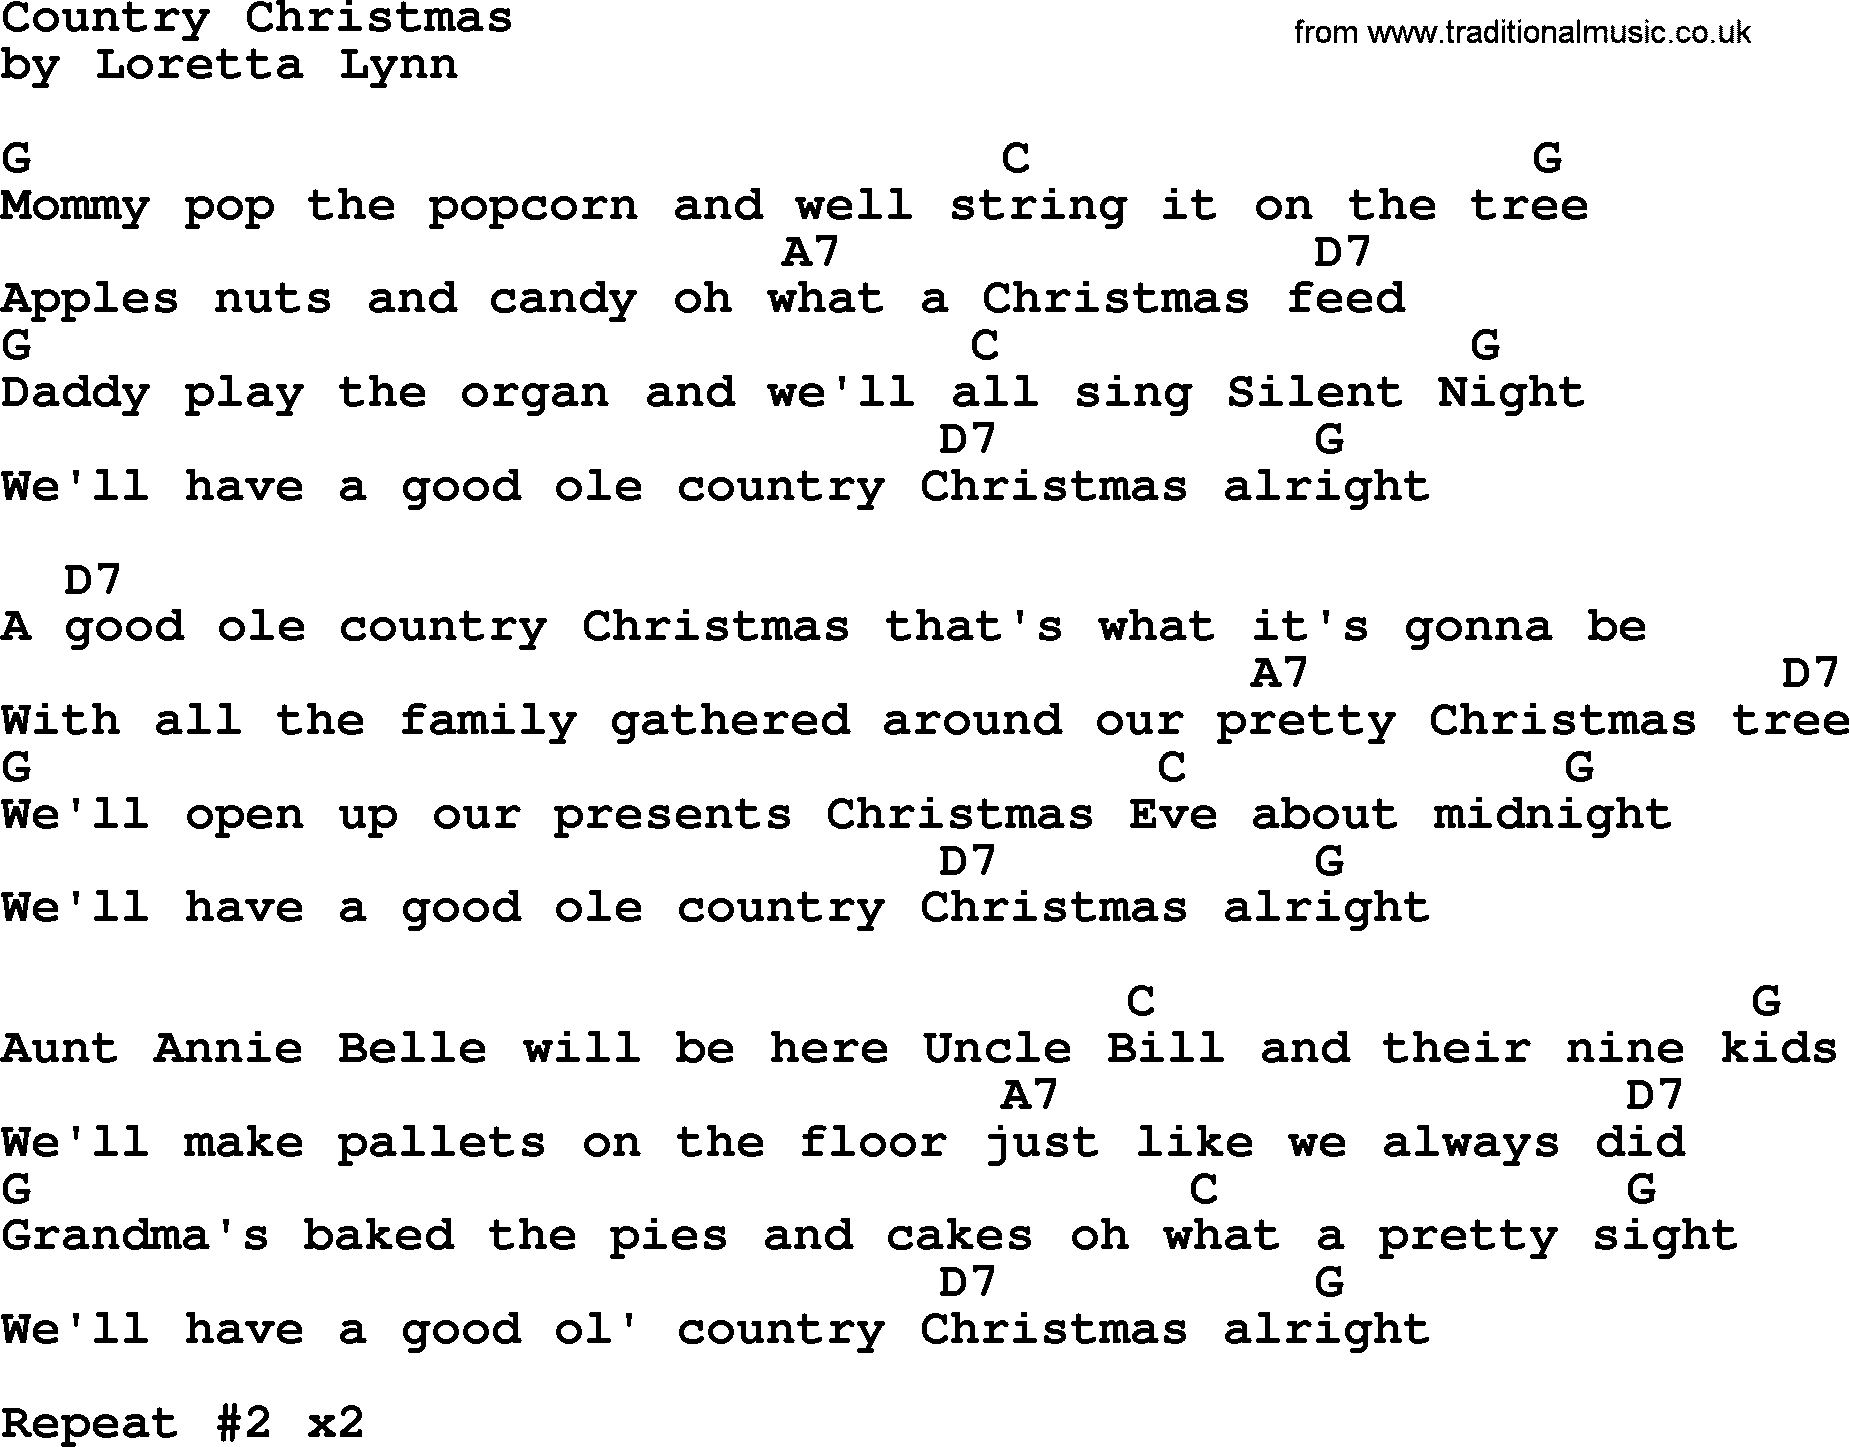 Loretta Lynn song: Country Christmas lyrics and chords